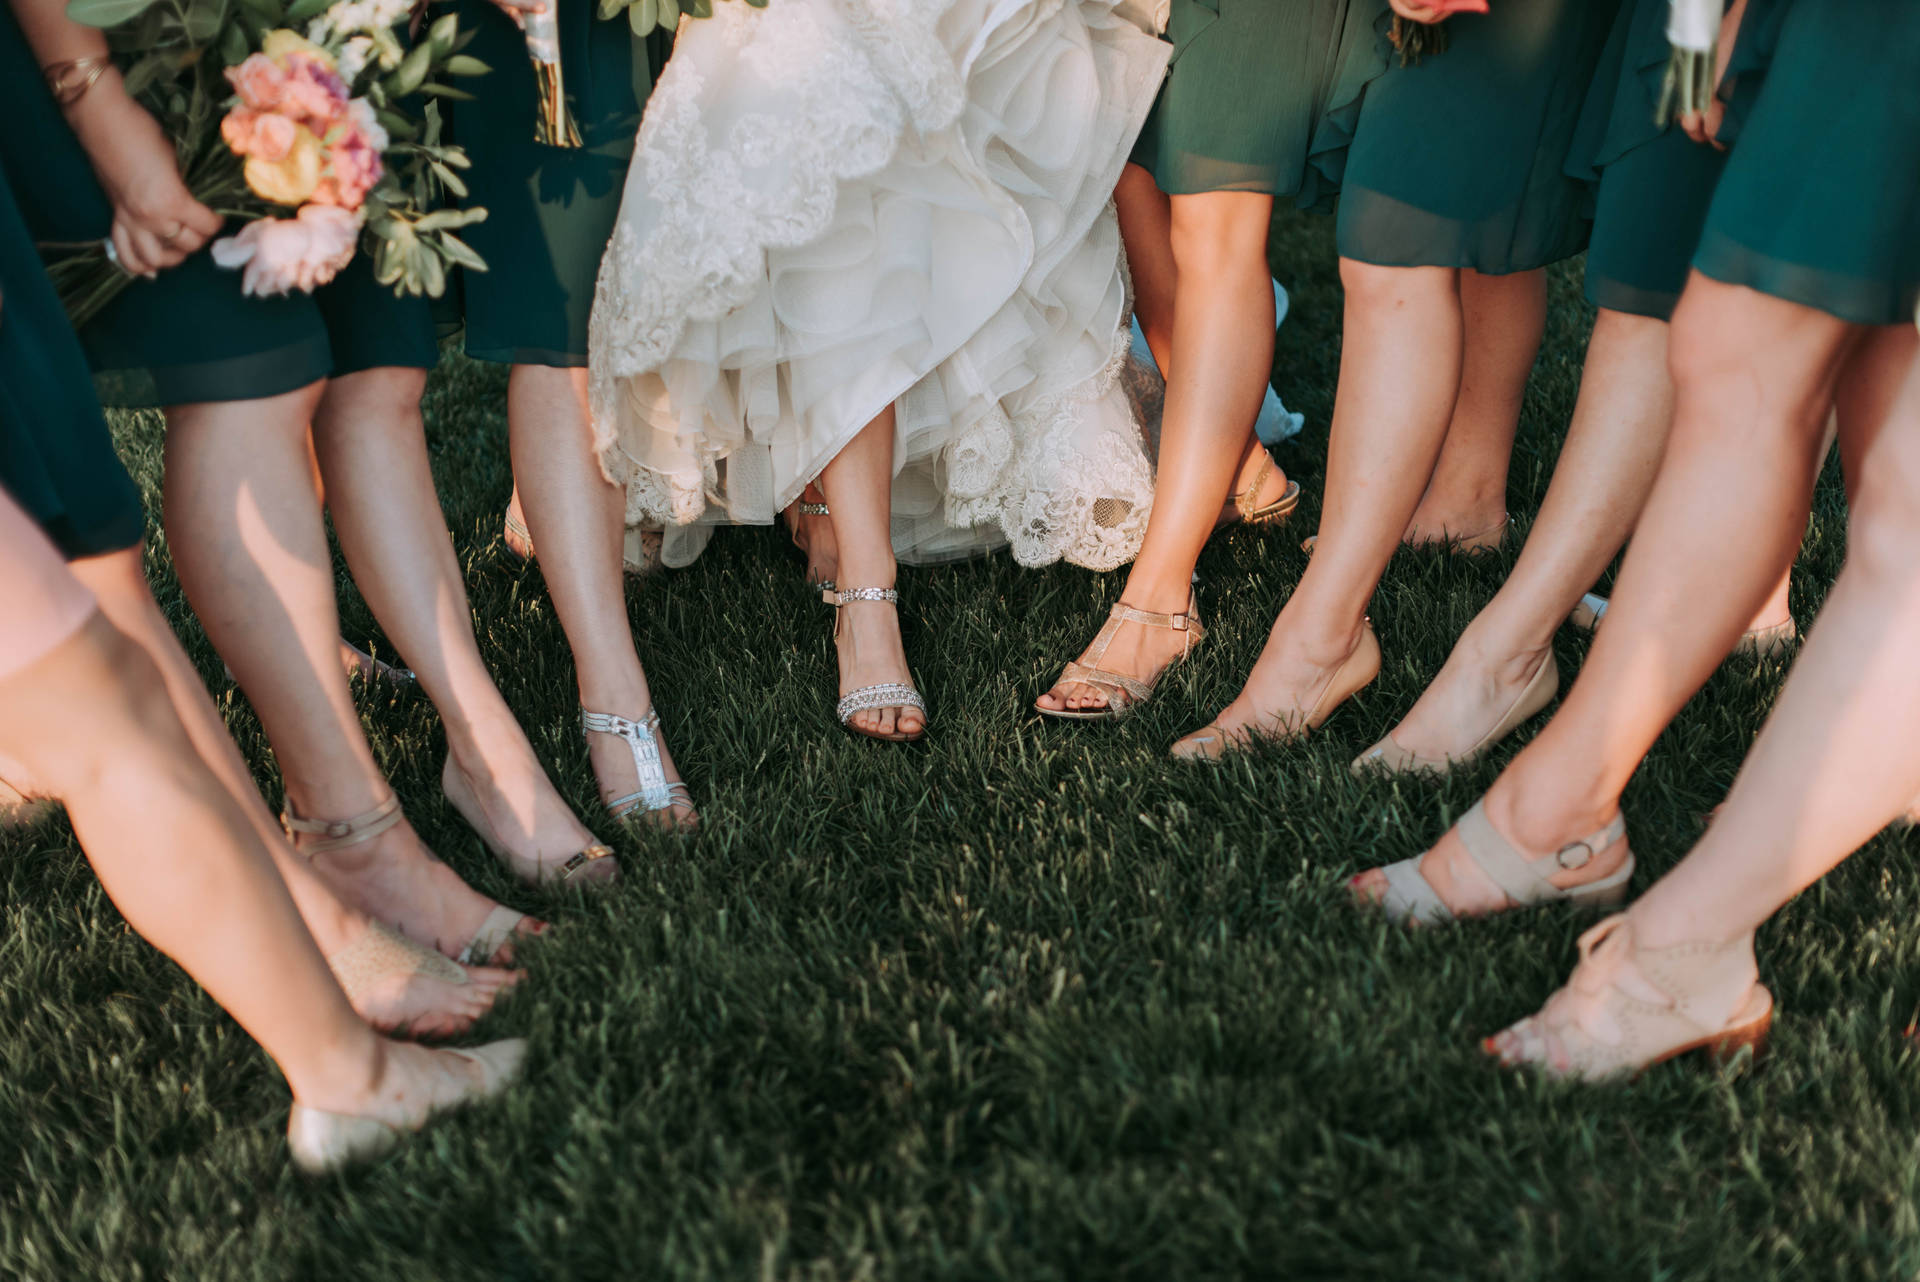 Bridesmaids High Heels In Grass Background